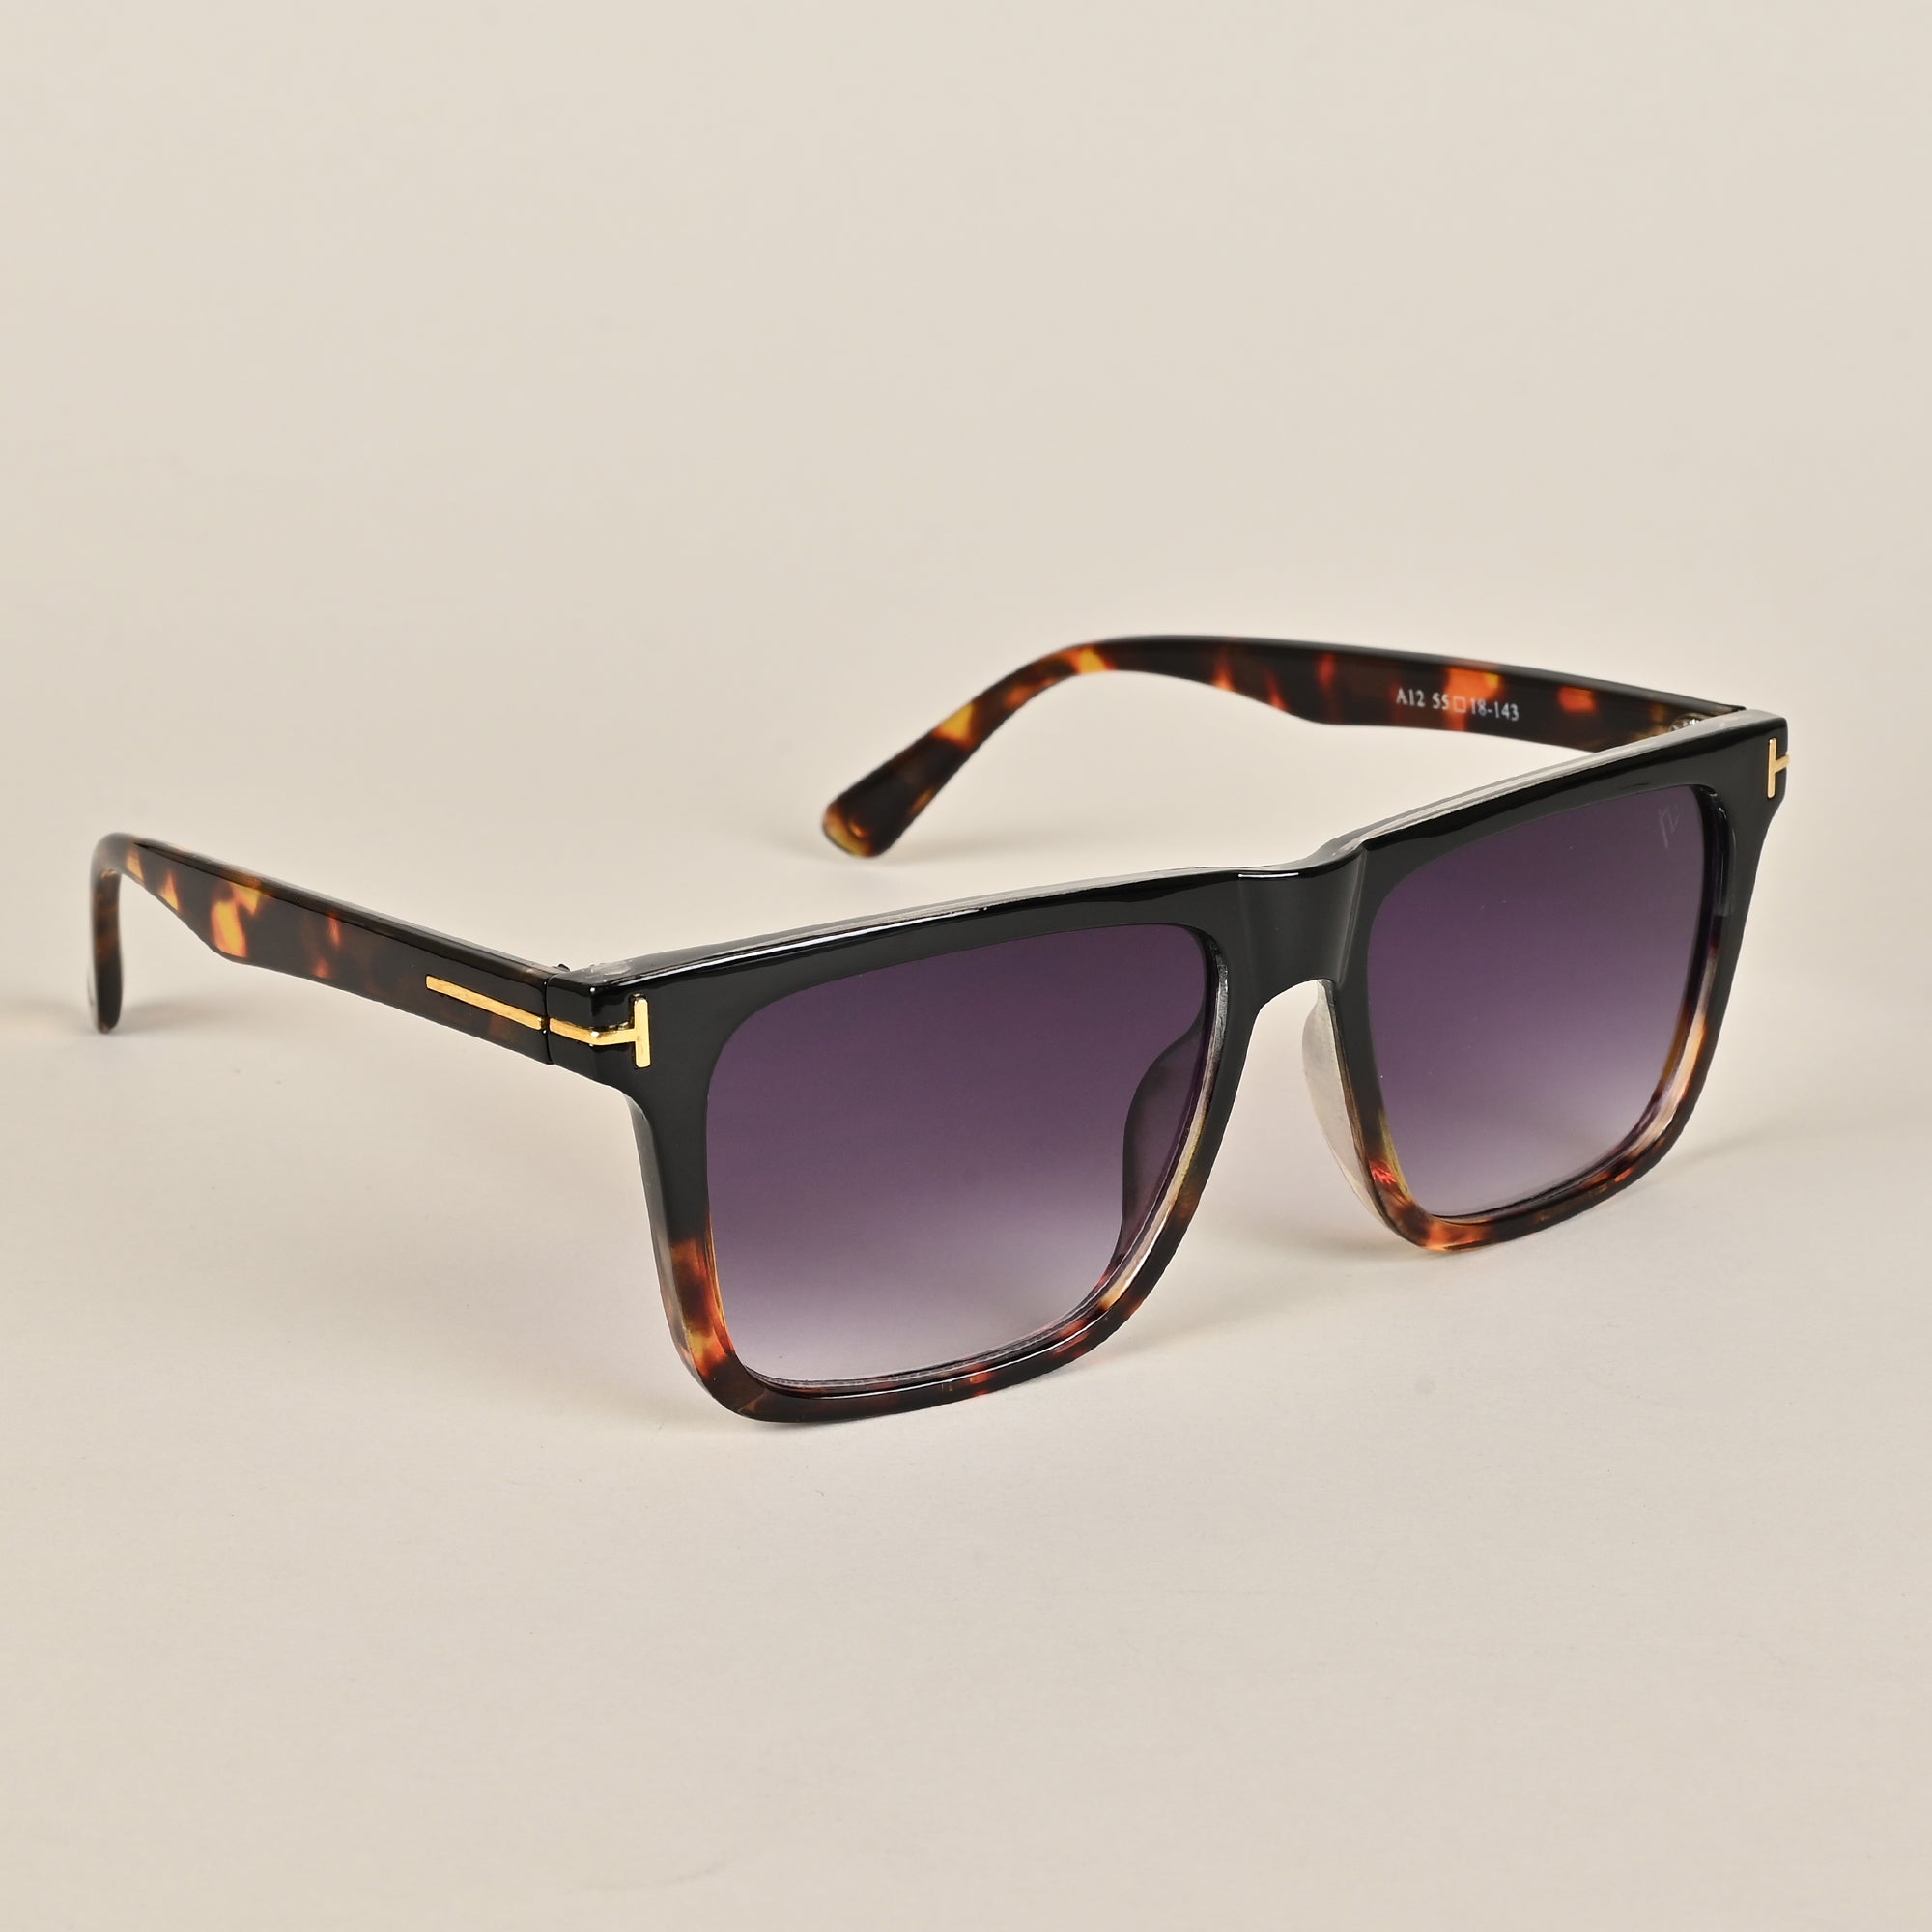 Voyage Black Wayfarer Sunglasses for Men & Women - MG3954